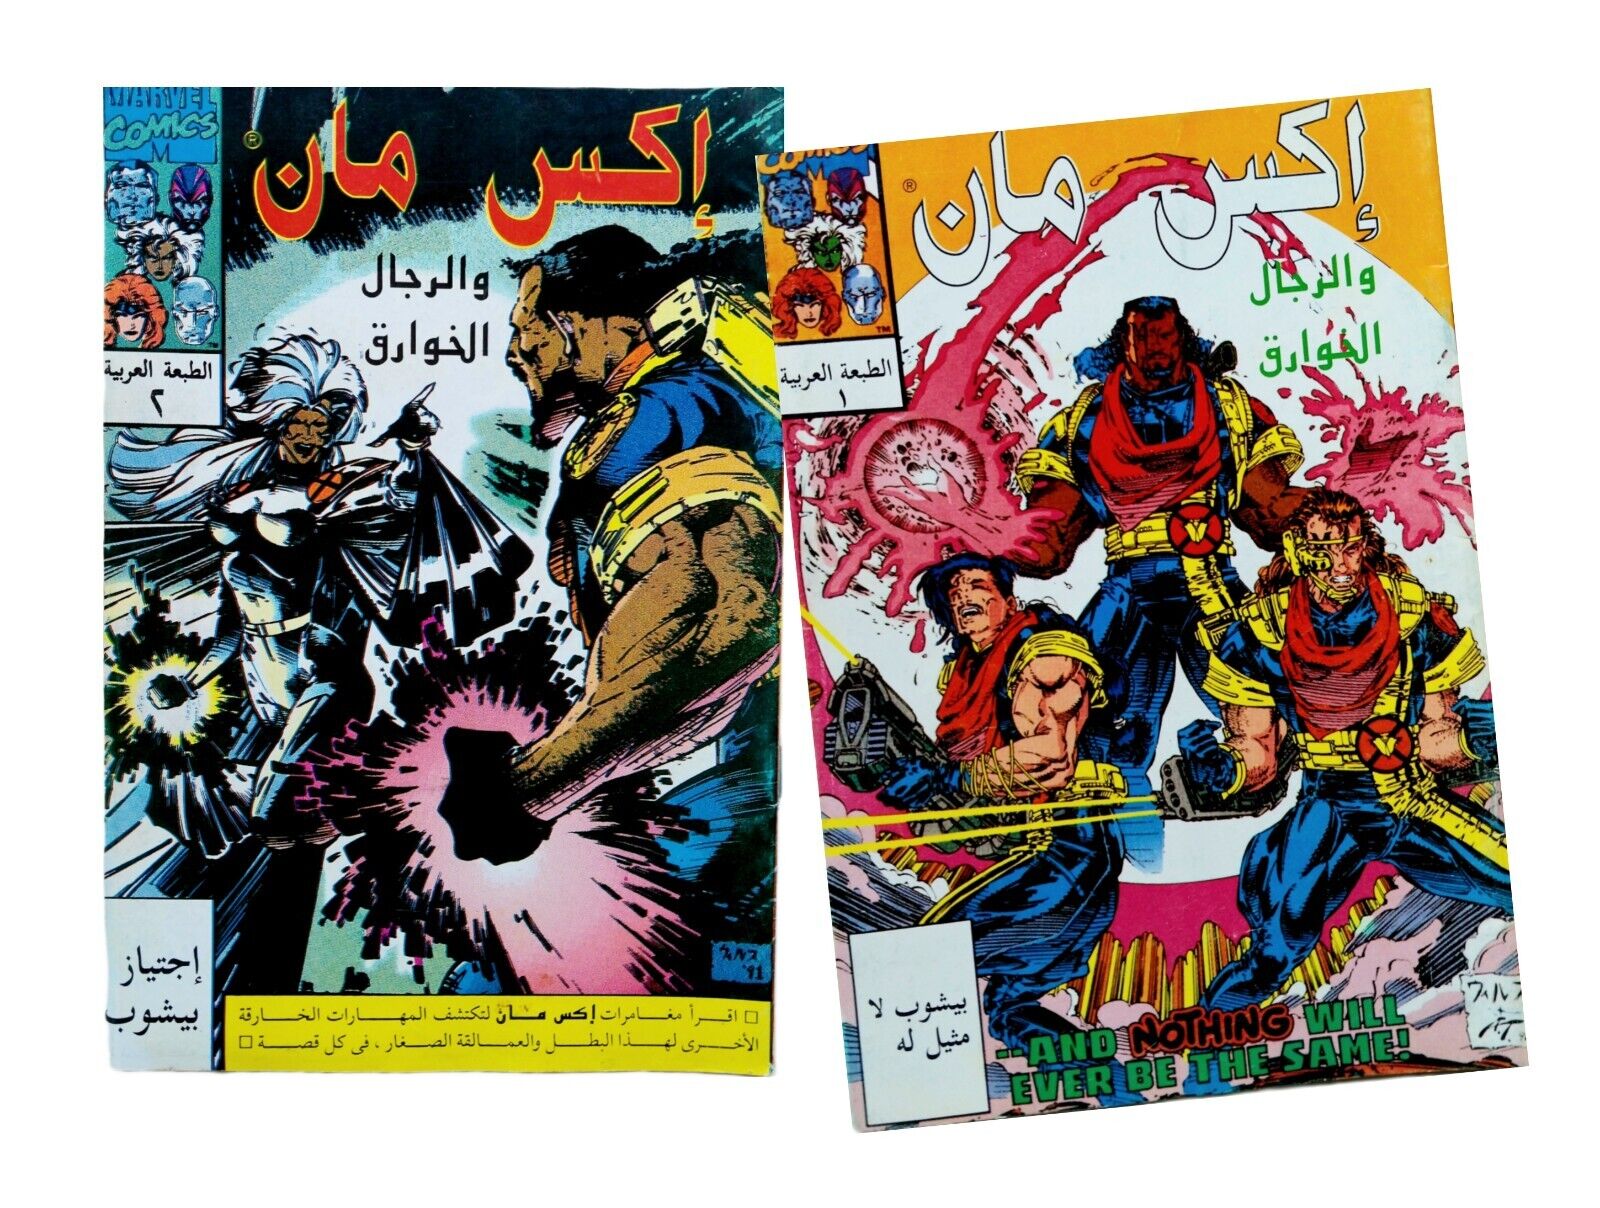 Rare X Man Adventure Comics Arabic Magazine Two 1993 Issues #1 #2 كومكس إكس مان